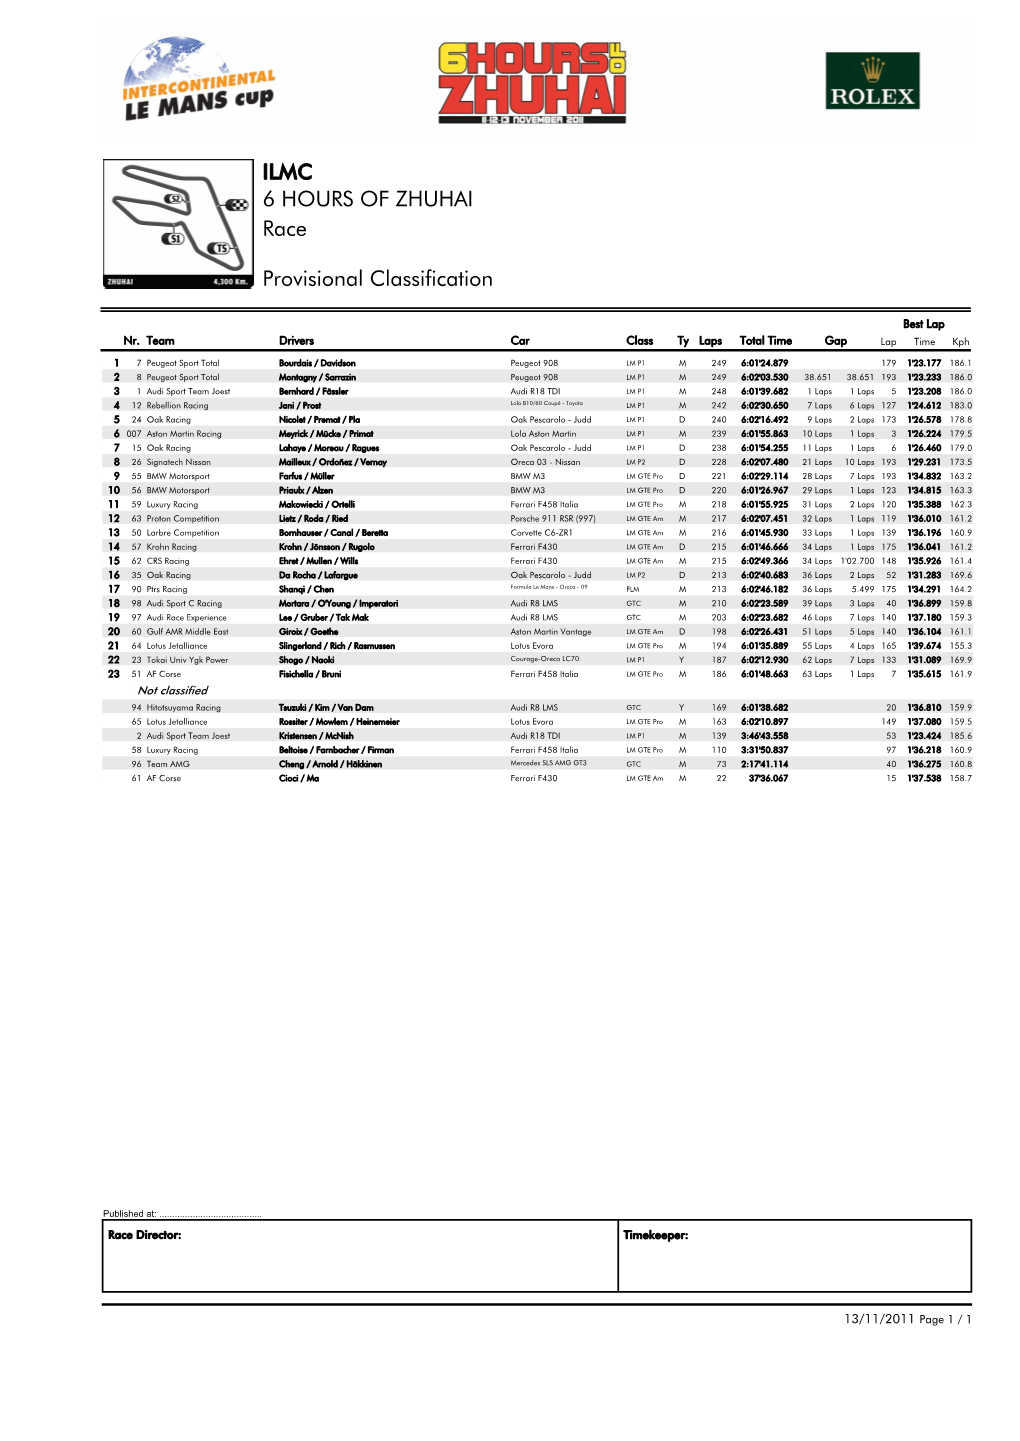 Race 6 HOURS of ZHUHAI ILMC Provisional Classification